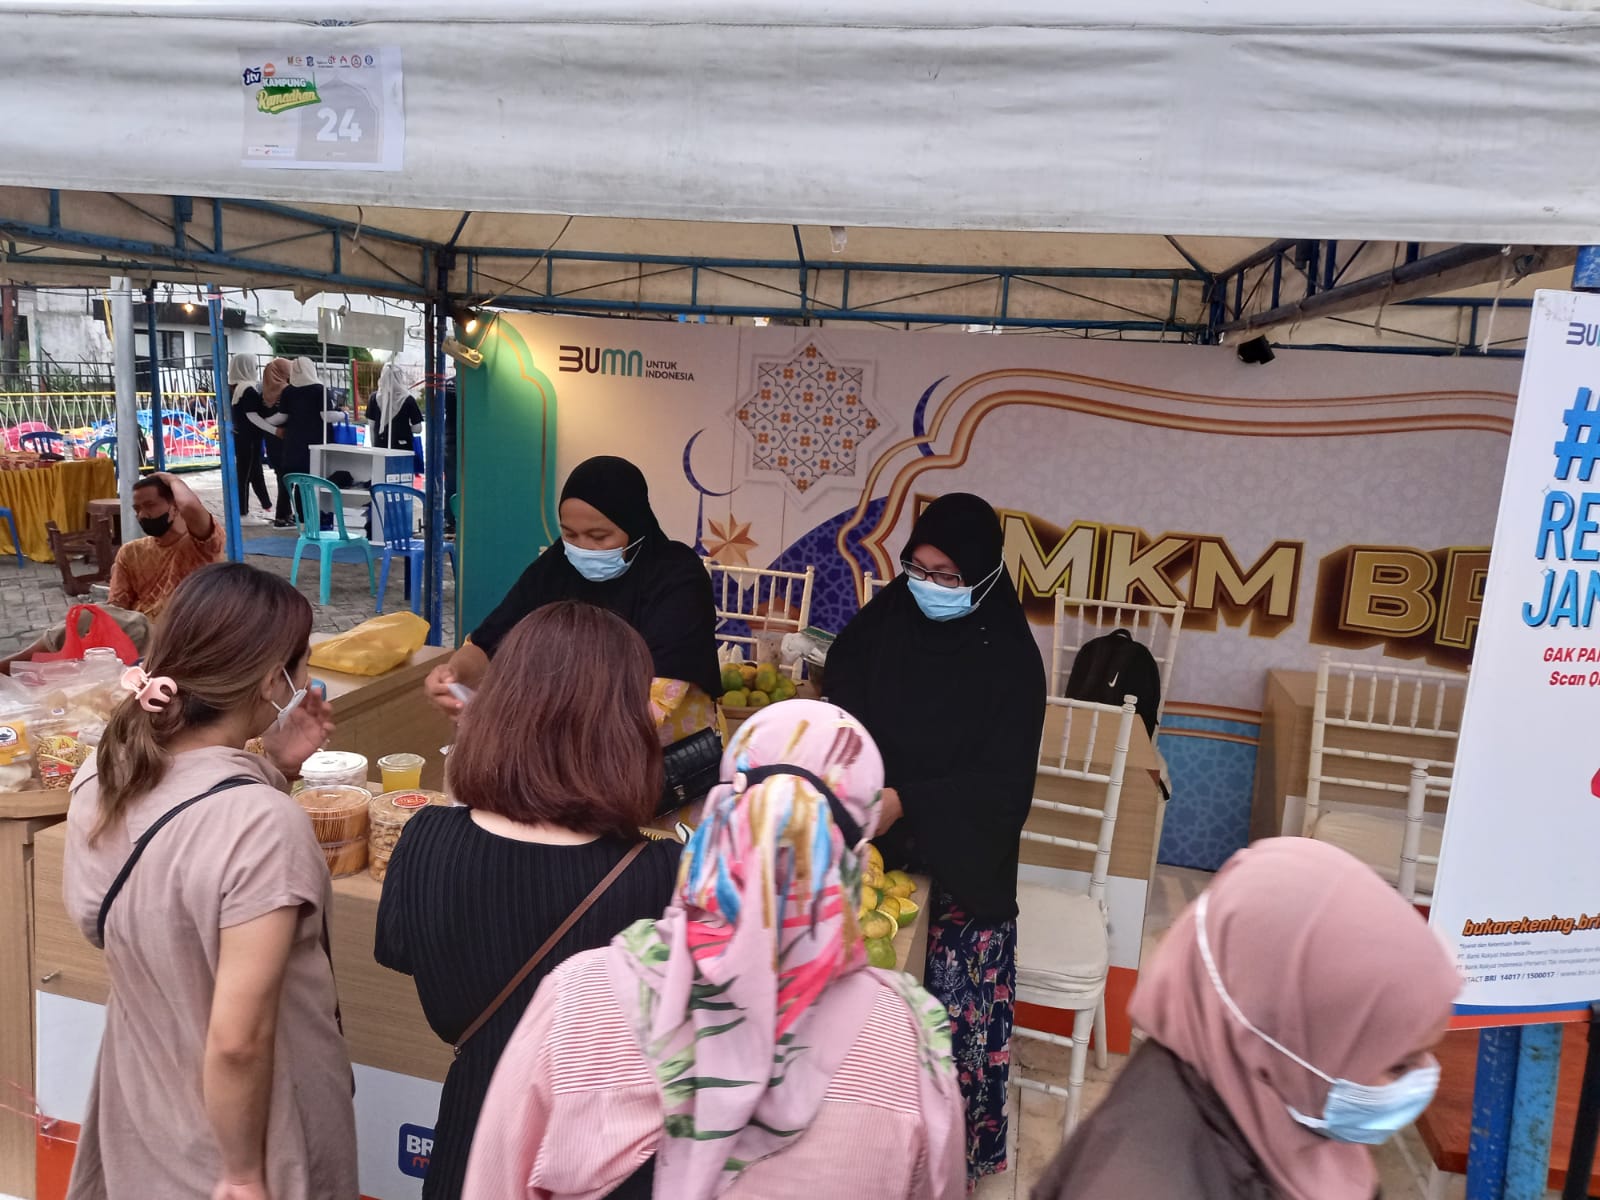 Sukses UMKM BRI, Wanita di Surabaya Bangun Komunitas Usaha Kampung Kue Omzet Puluhan Juta